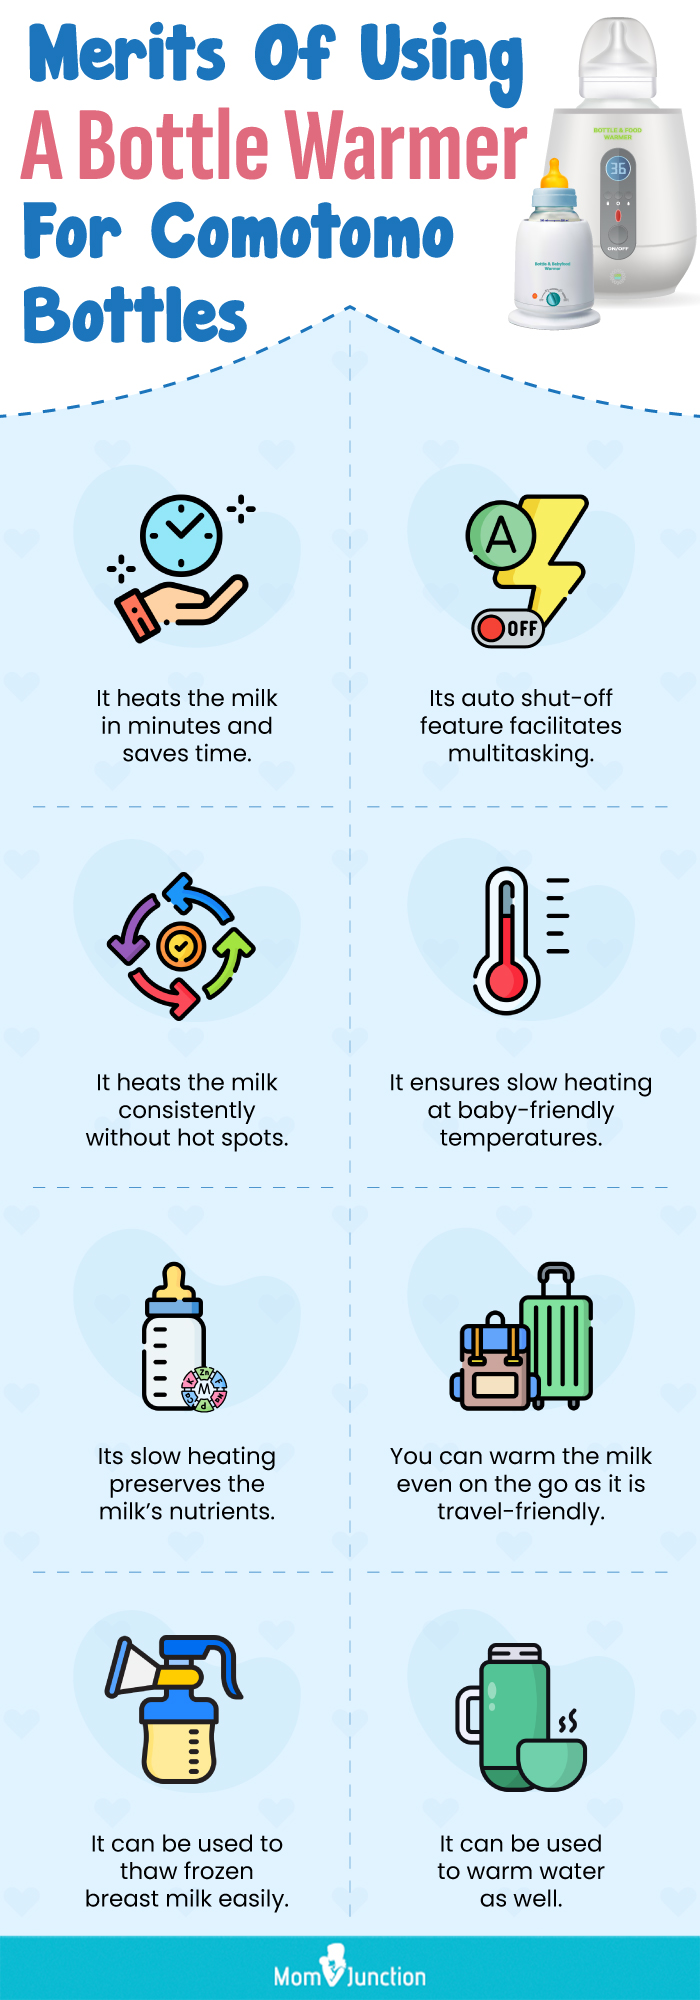 Merits Of Using A Bottle Warmer For Comotomo Bottles (infographic)